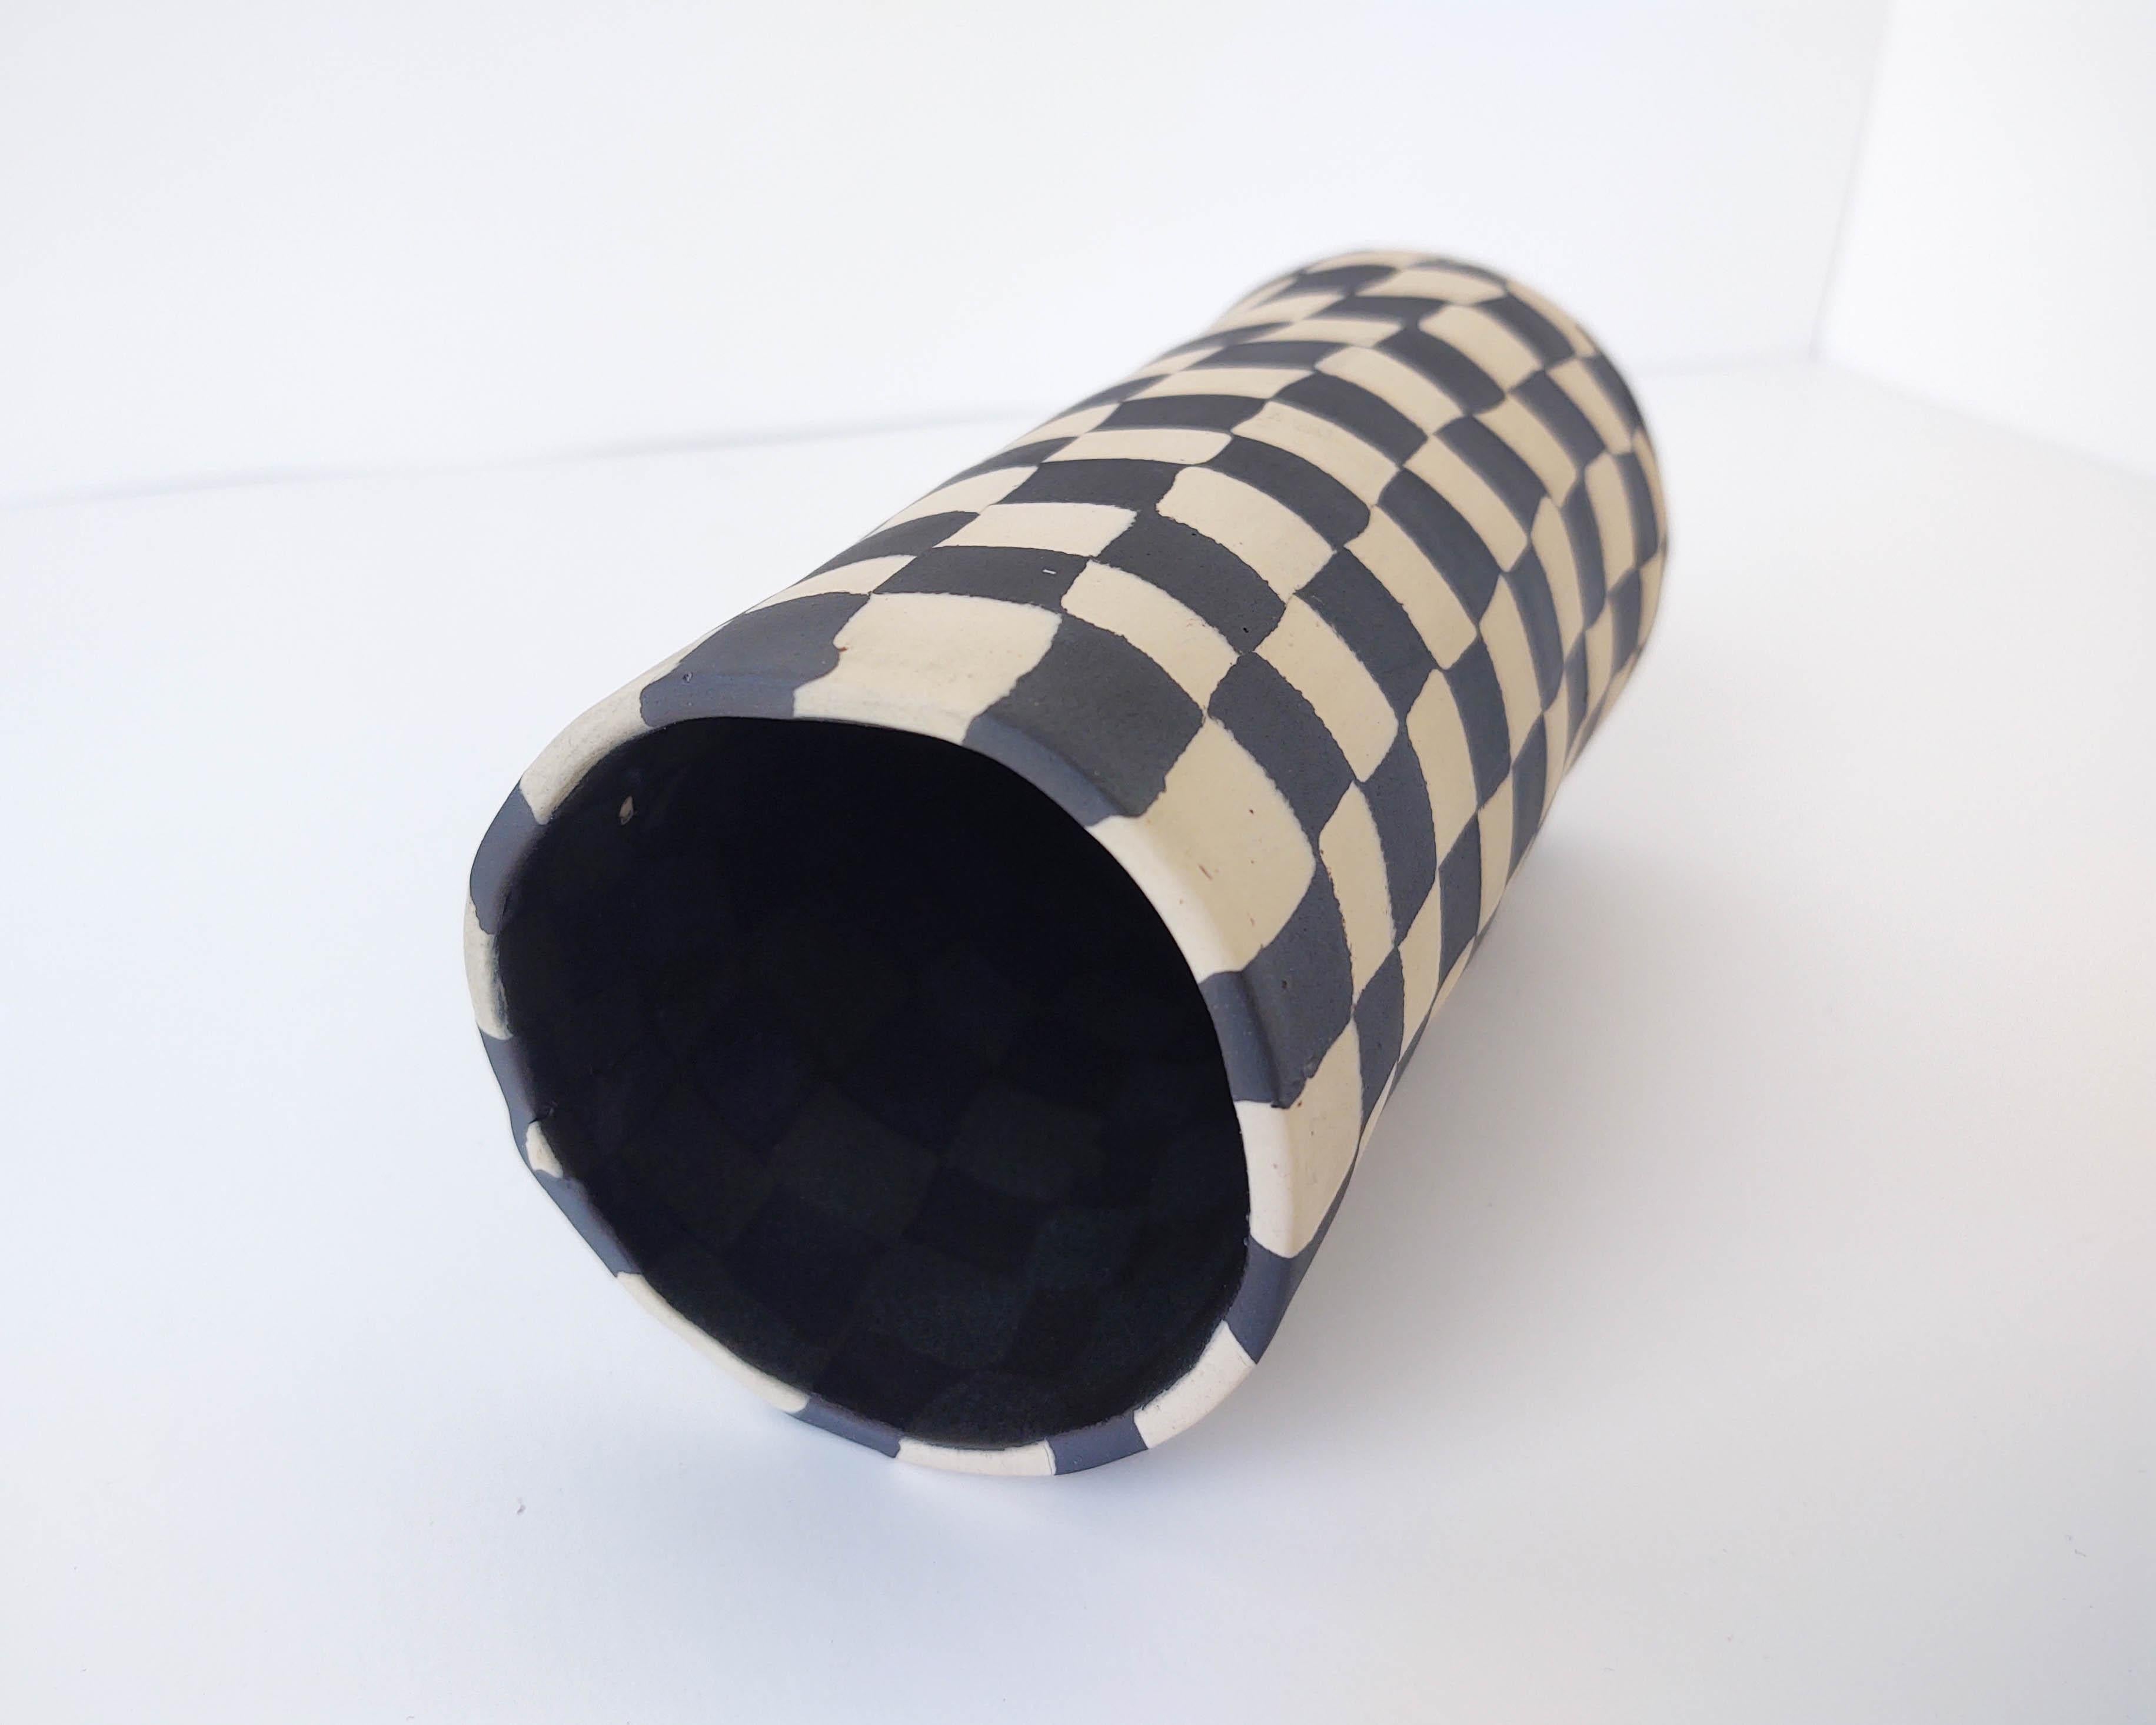 Hand-Crafted Handmade Nerikomi Black & White Checkered Ceramic Vase by Fizzy Ceramics